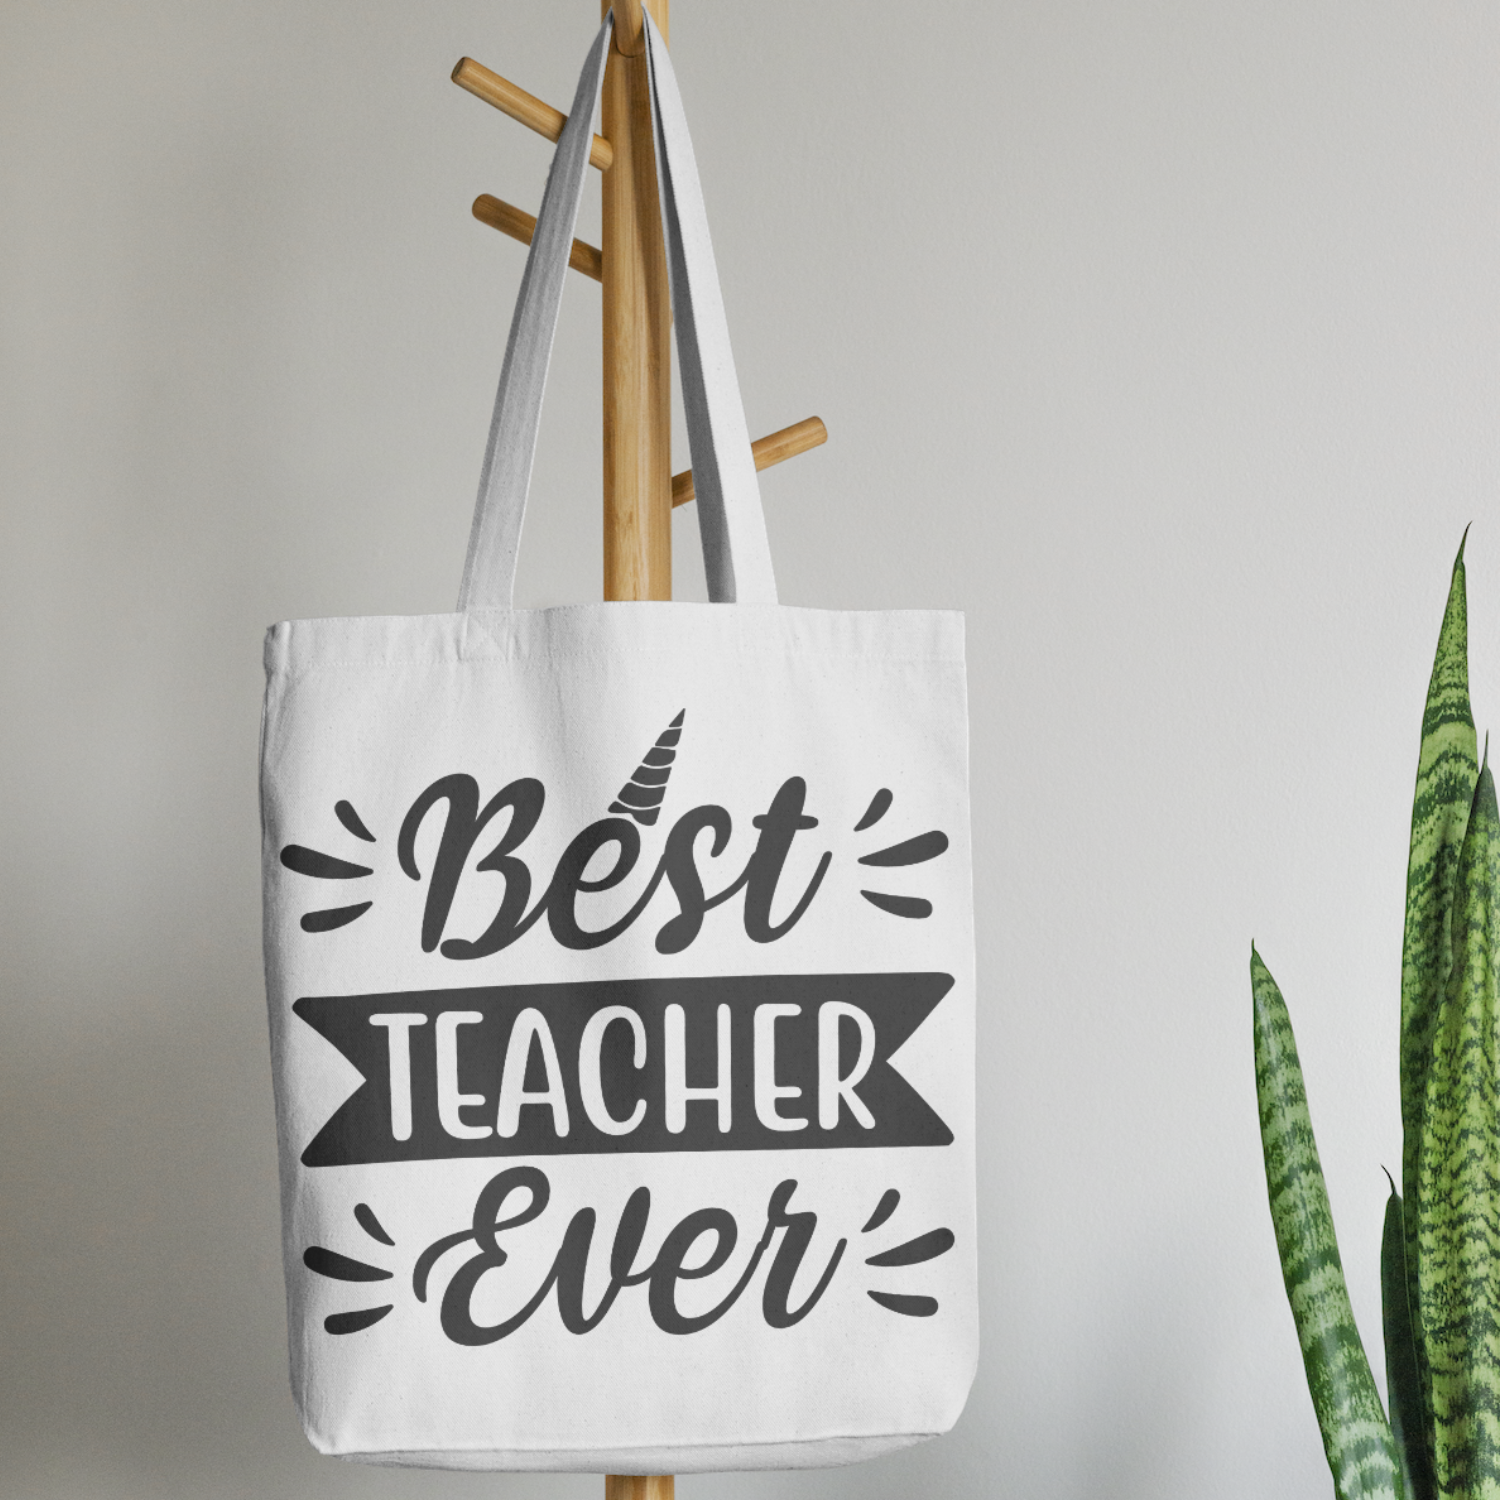 Best teacher ever SVG | Digital Download | Cut File | SVG - Only The Sweet Stuff